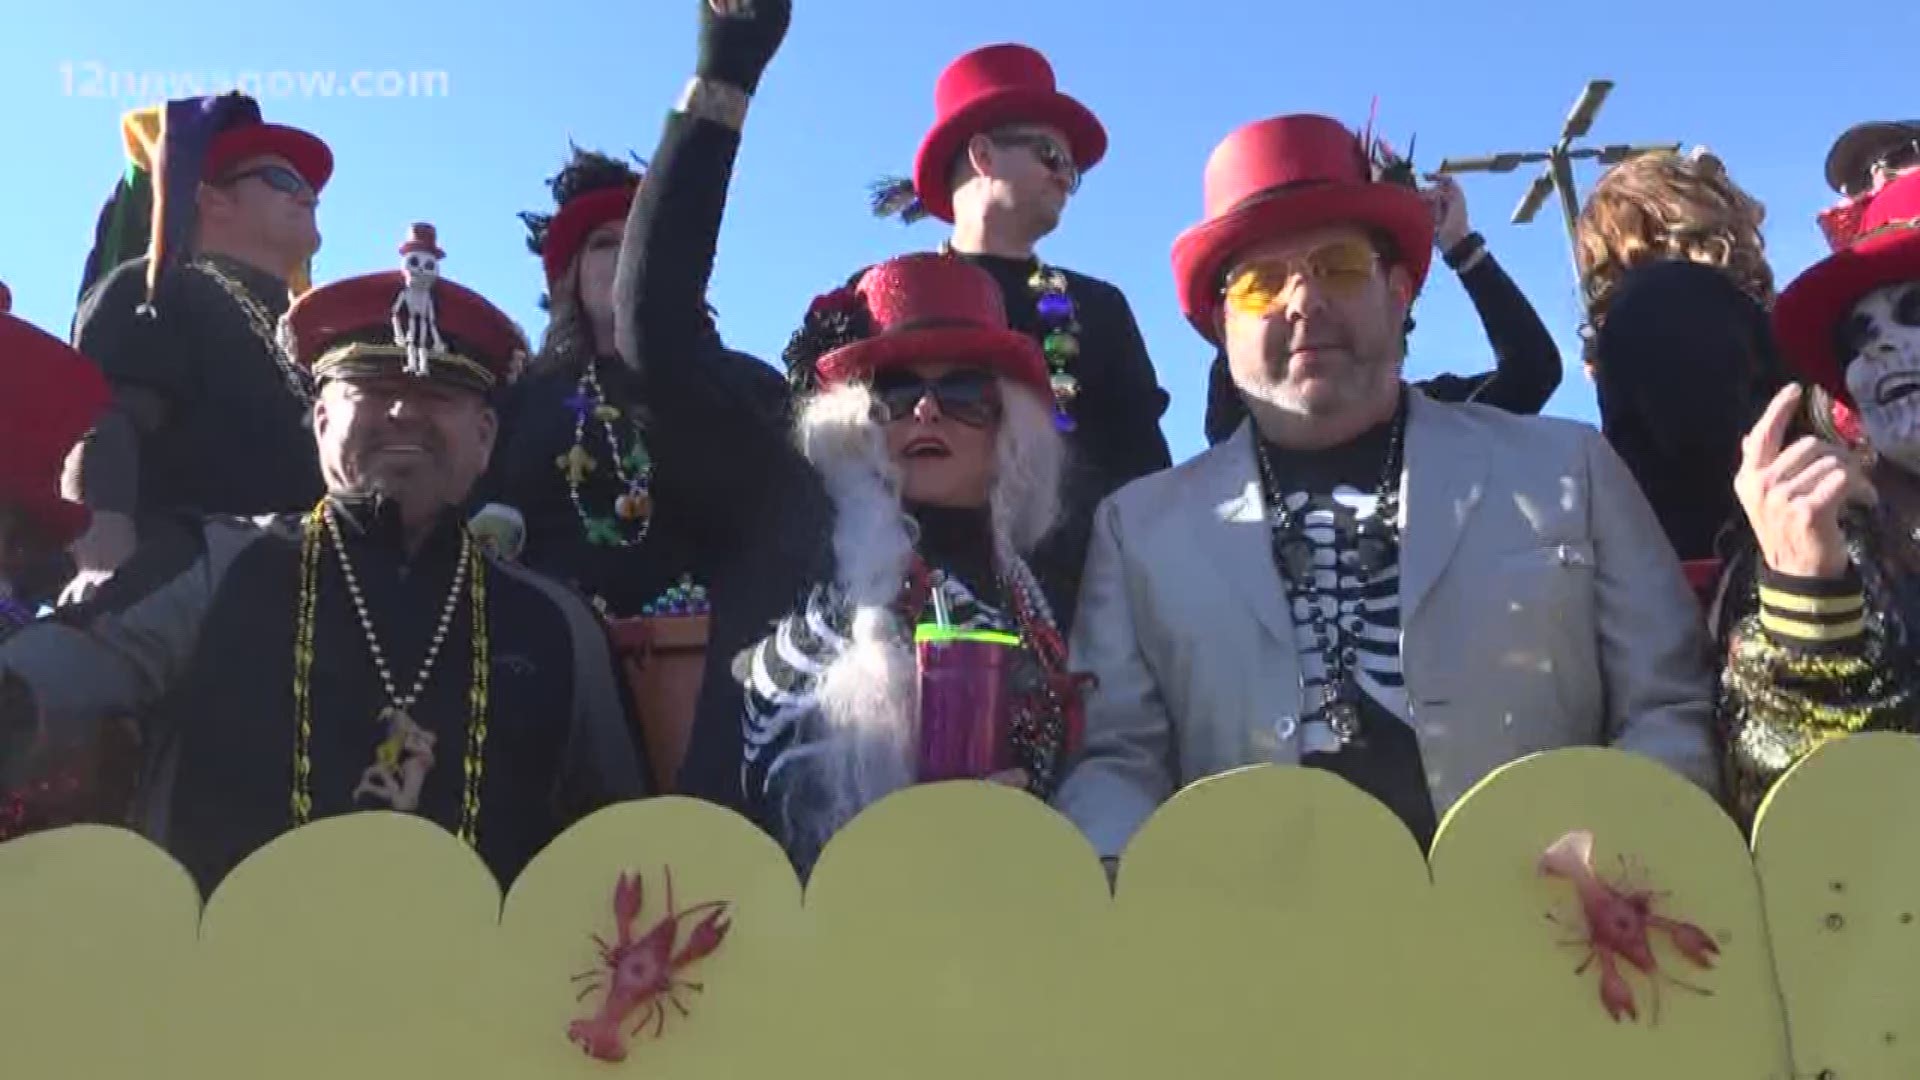 Day two of Mardi Gras kicks off with Valero Krewe of Krewes parade